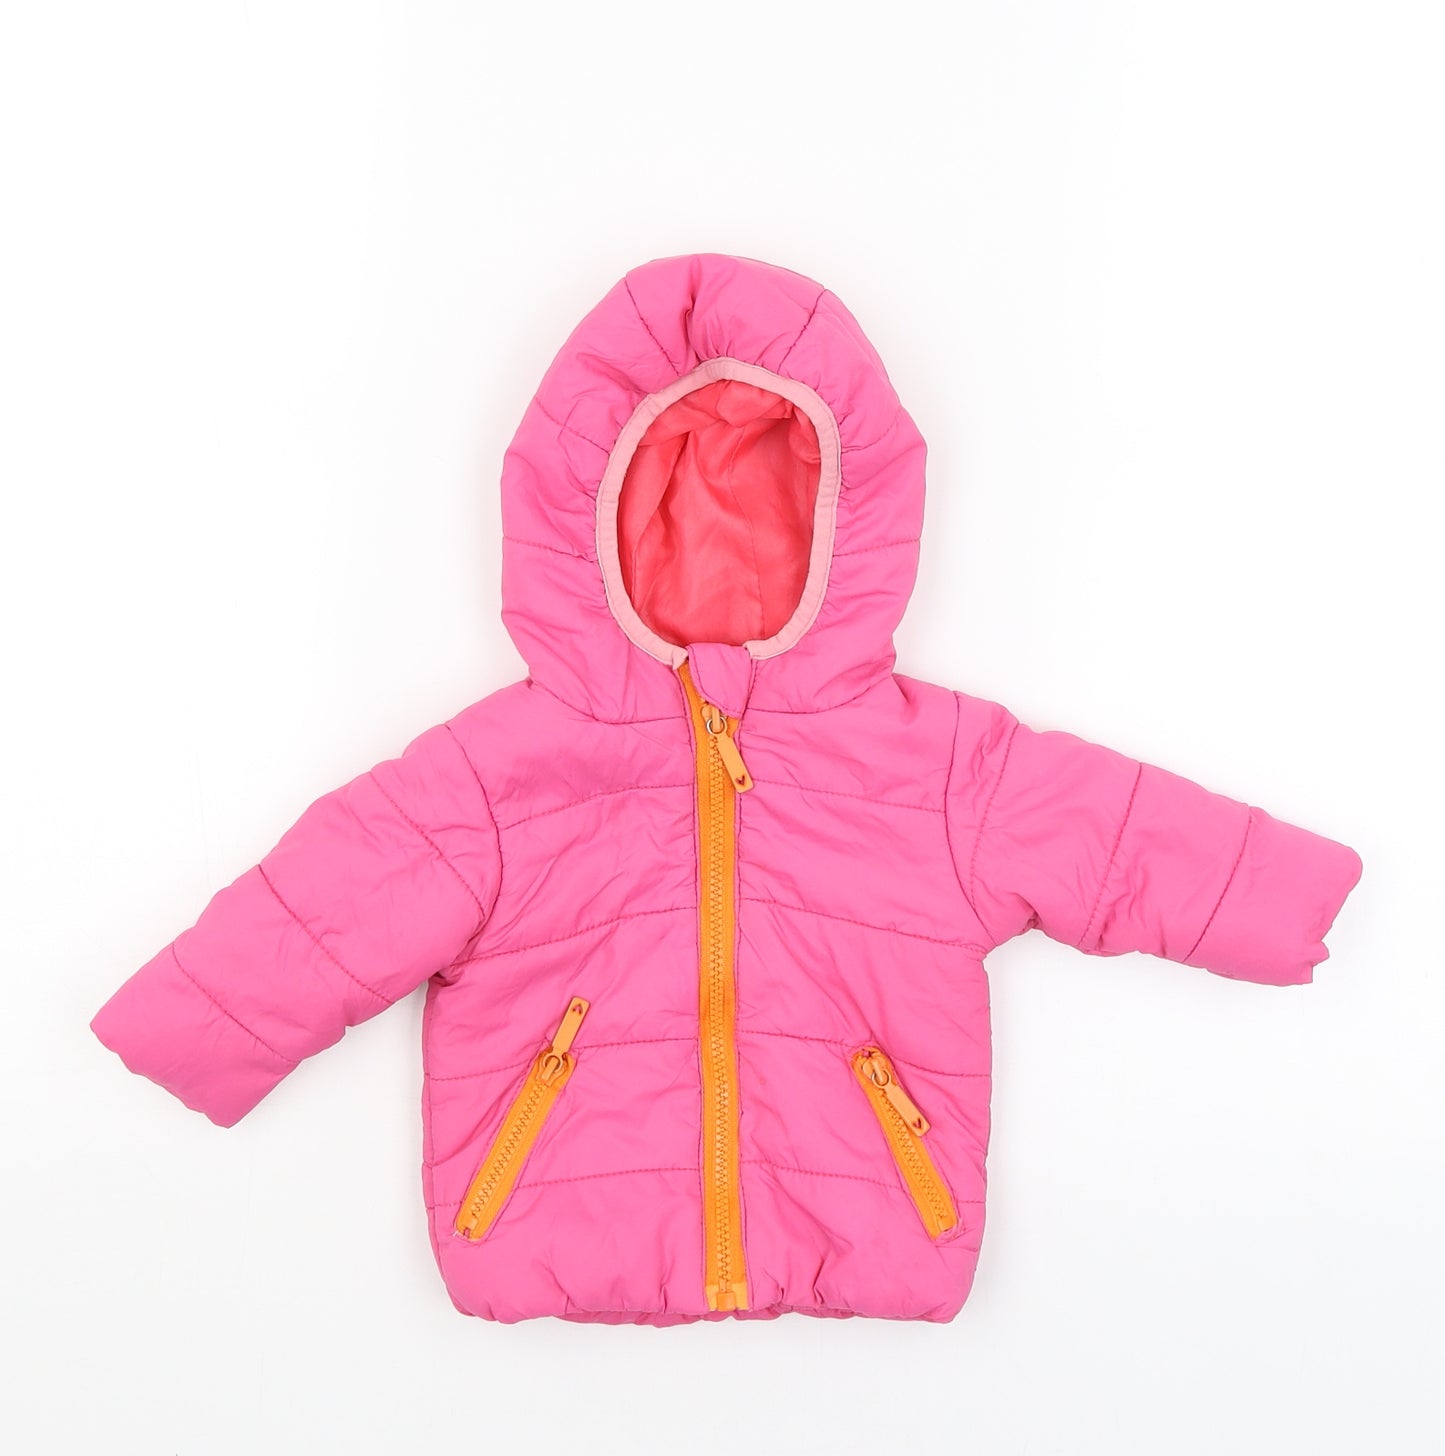 My love item Girls Pink   Jacket Coat Size 3-6 Months